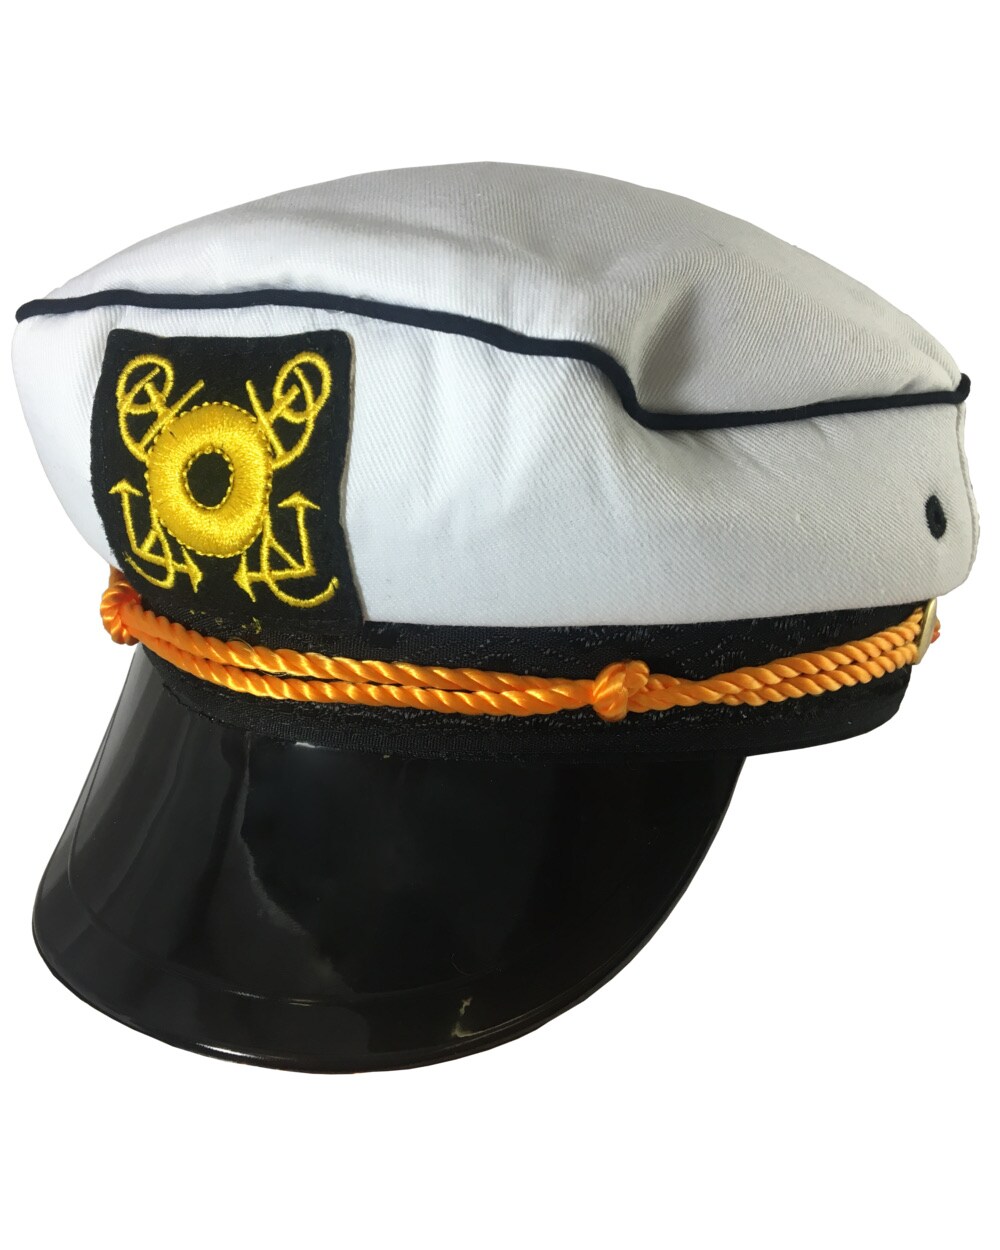 Adults Adjustable Yacht Boat Captain's Sailing Hat Cap Costume